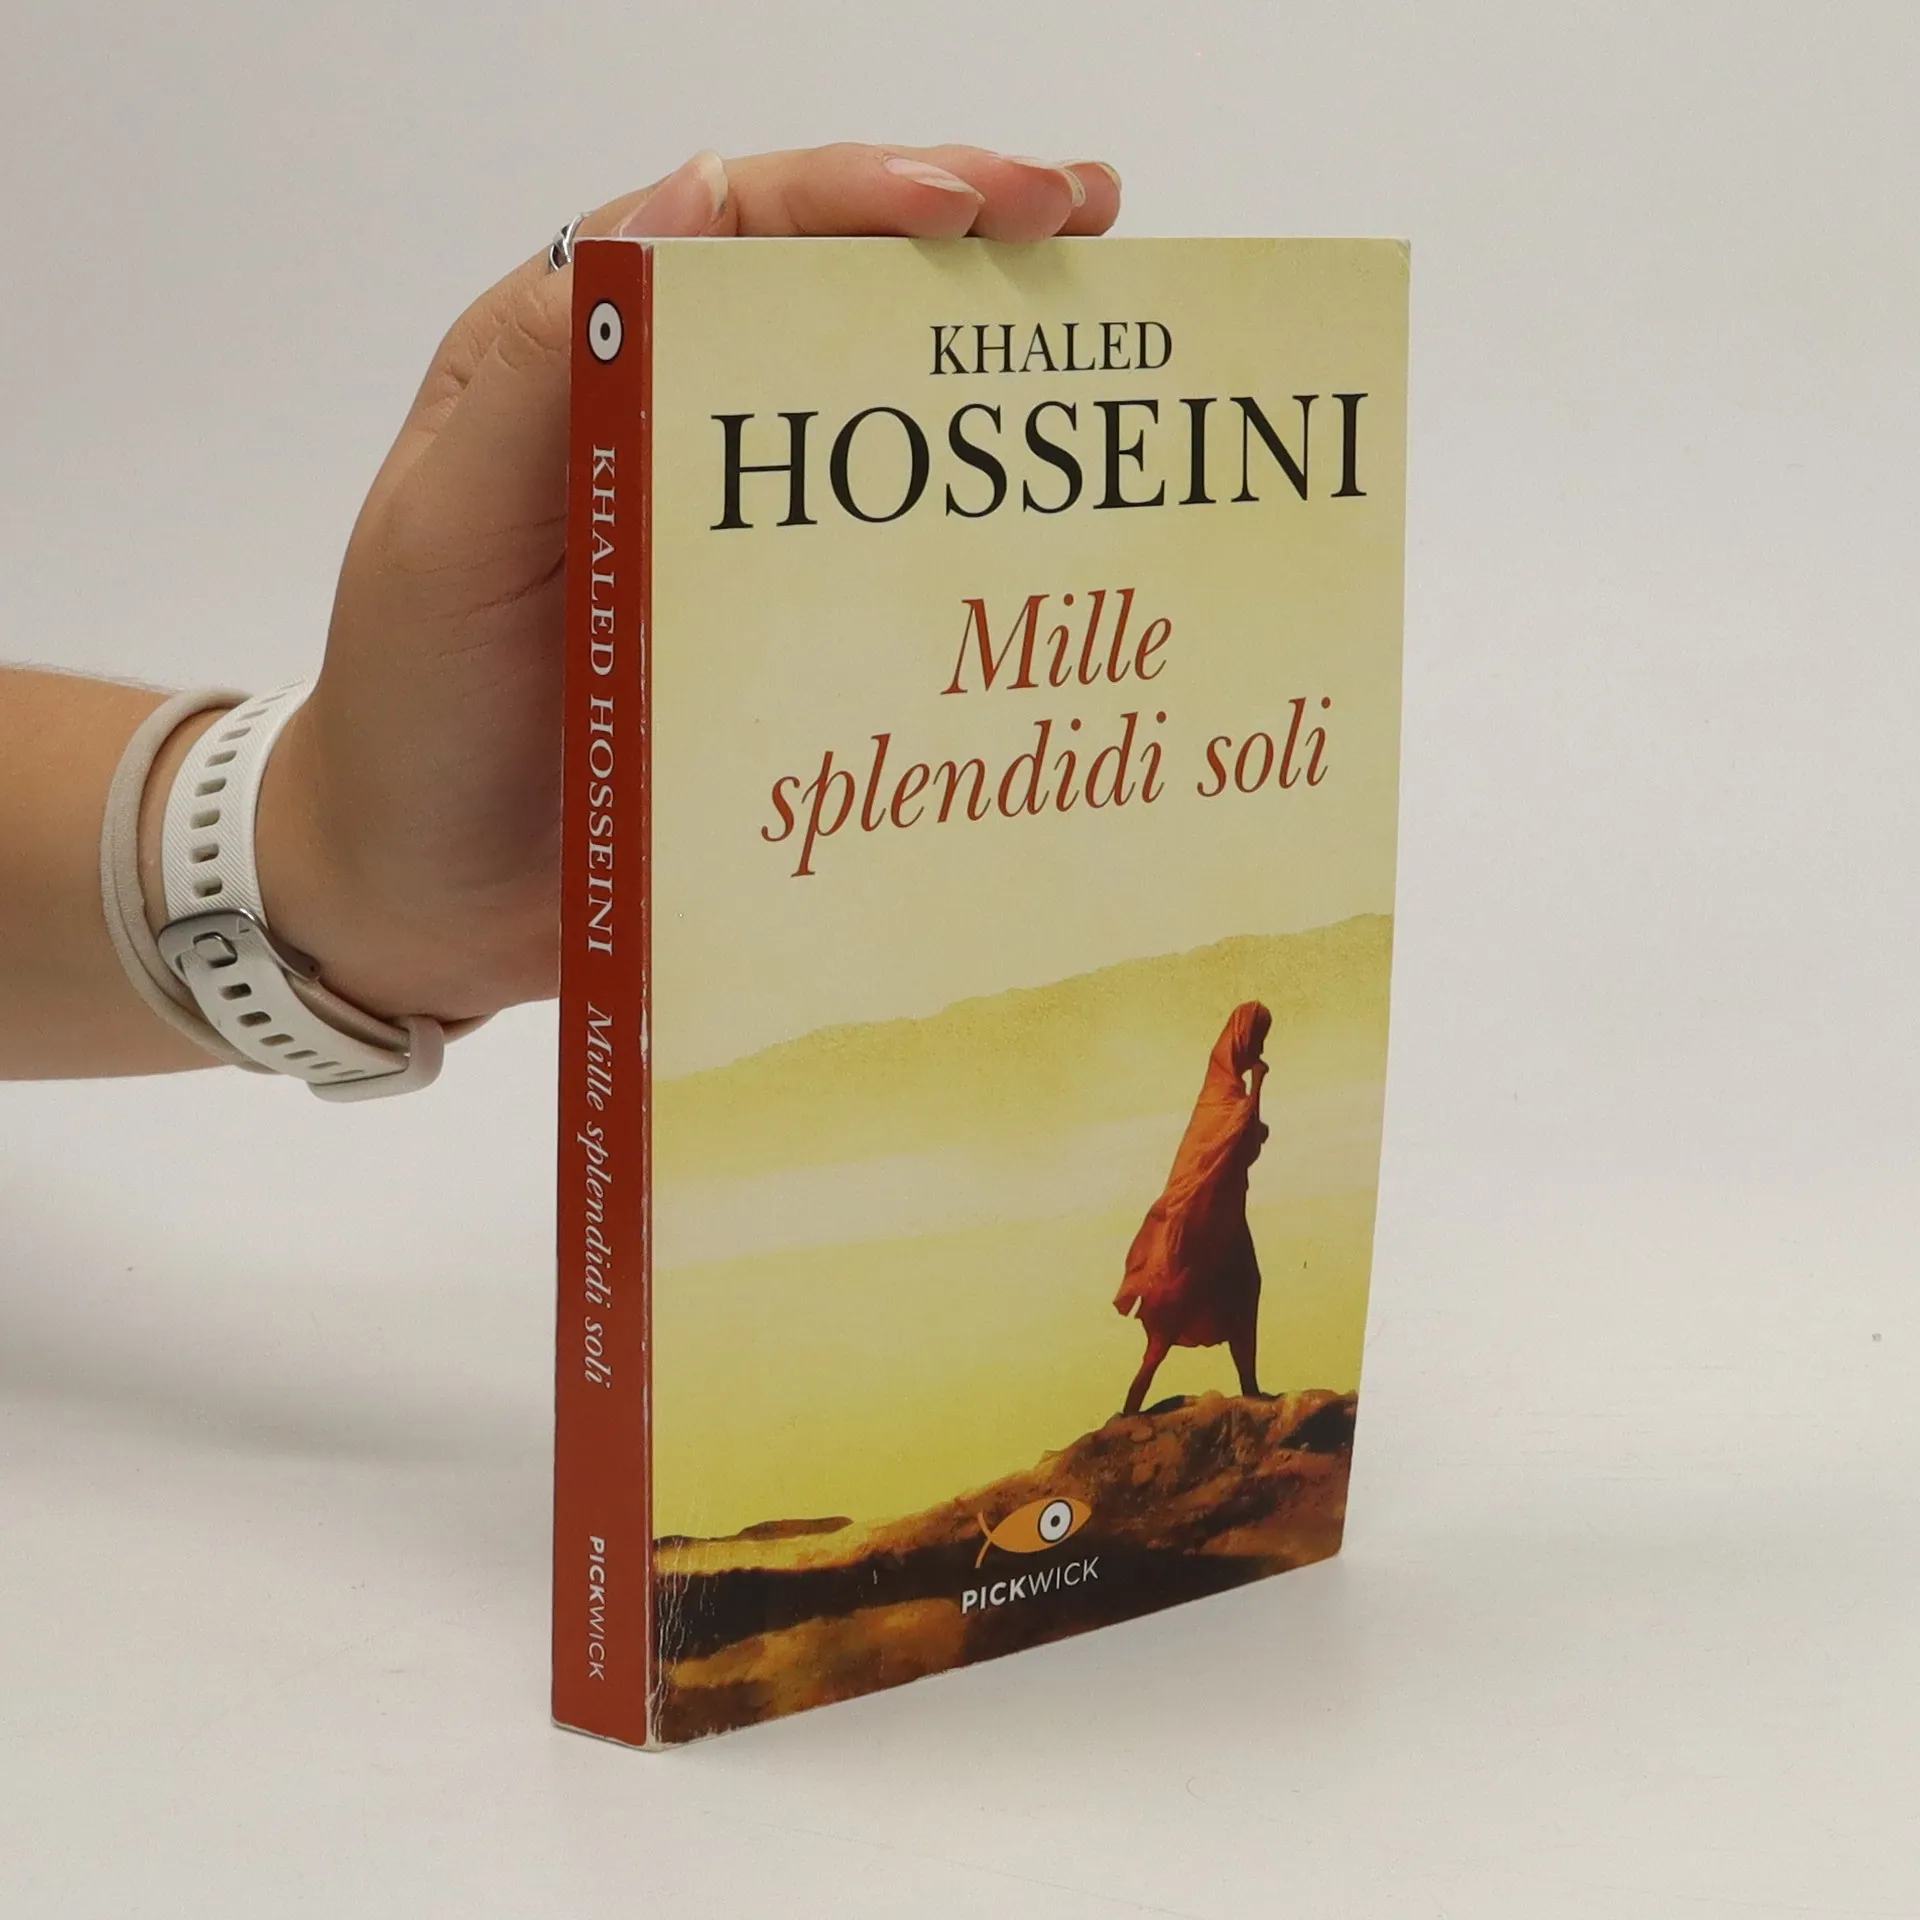 Mille splendidi soli - Khaled Hosseini 